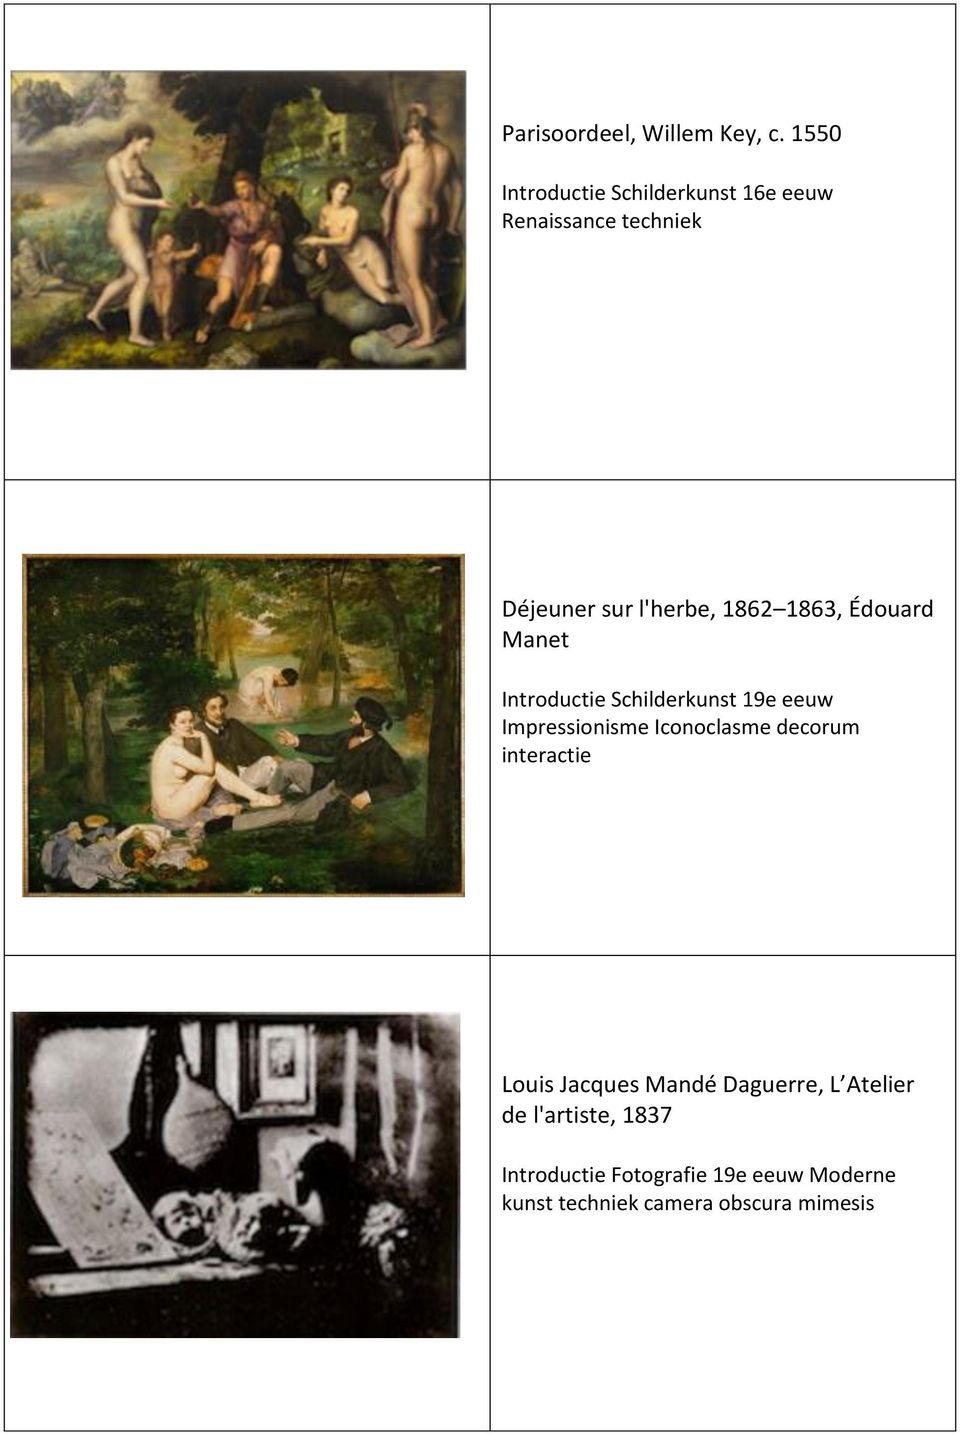 1863, Édouard Manet Introductie Schilderkunst 19e eeuw Impressionisme Iconoclasme